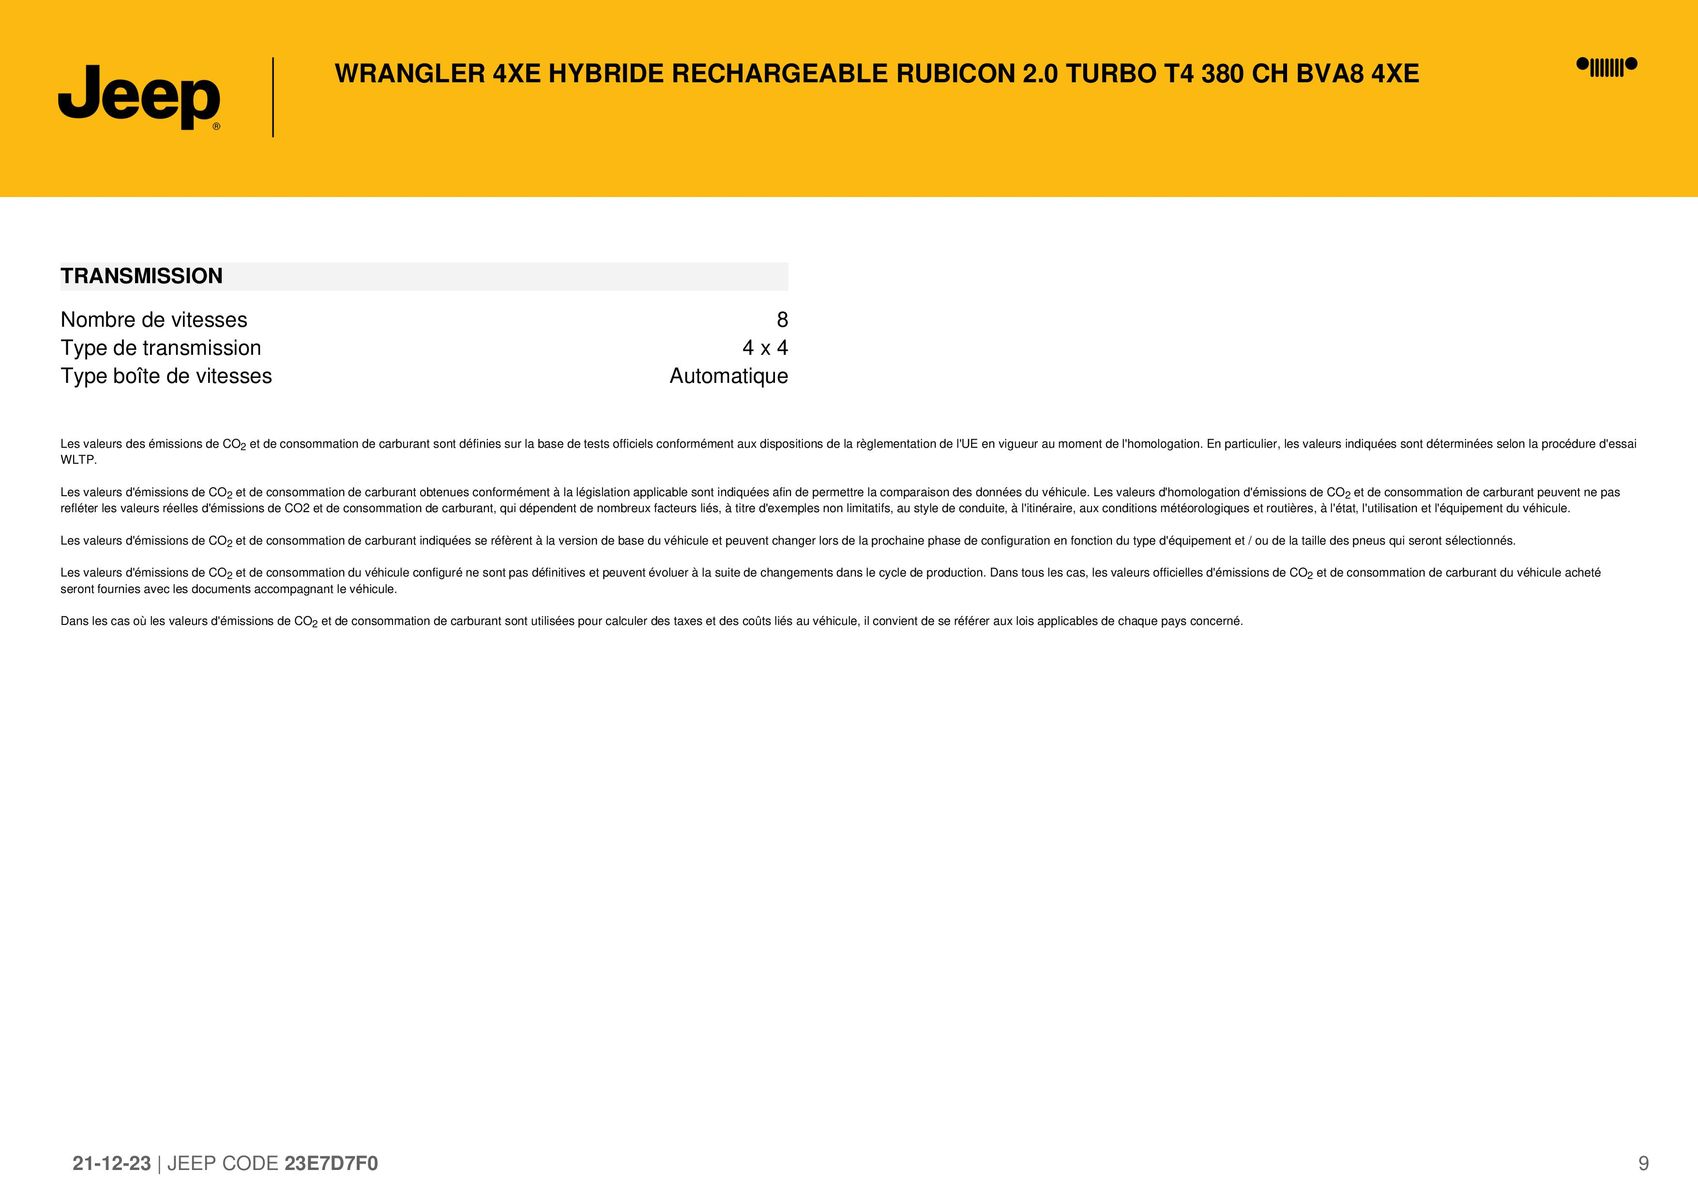 Catalogue WRANGLER 4XE HYBRIDE RECHARGEABLE RUBICON 2.0 TURBO T4 380 CH BVA8 4XE., page 00009